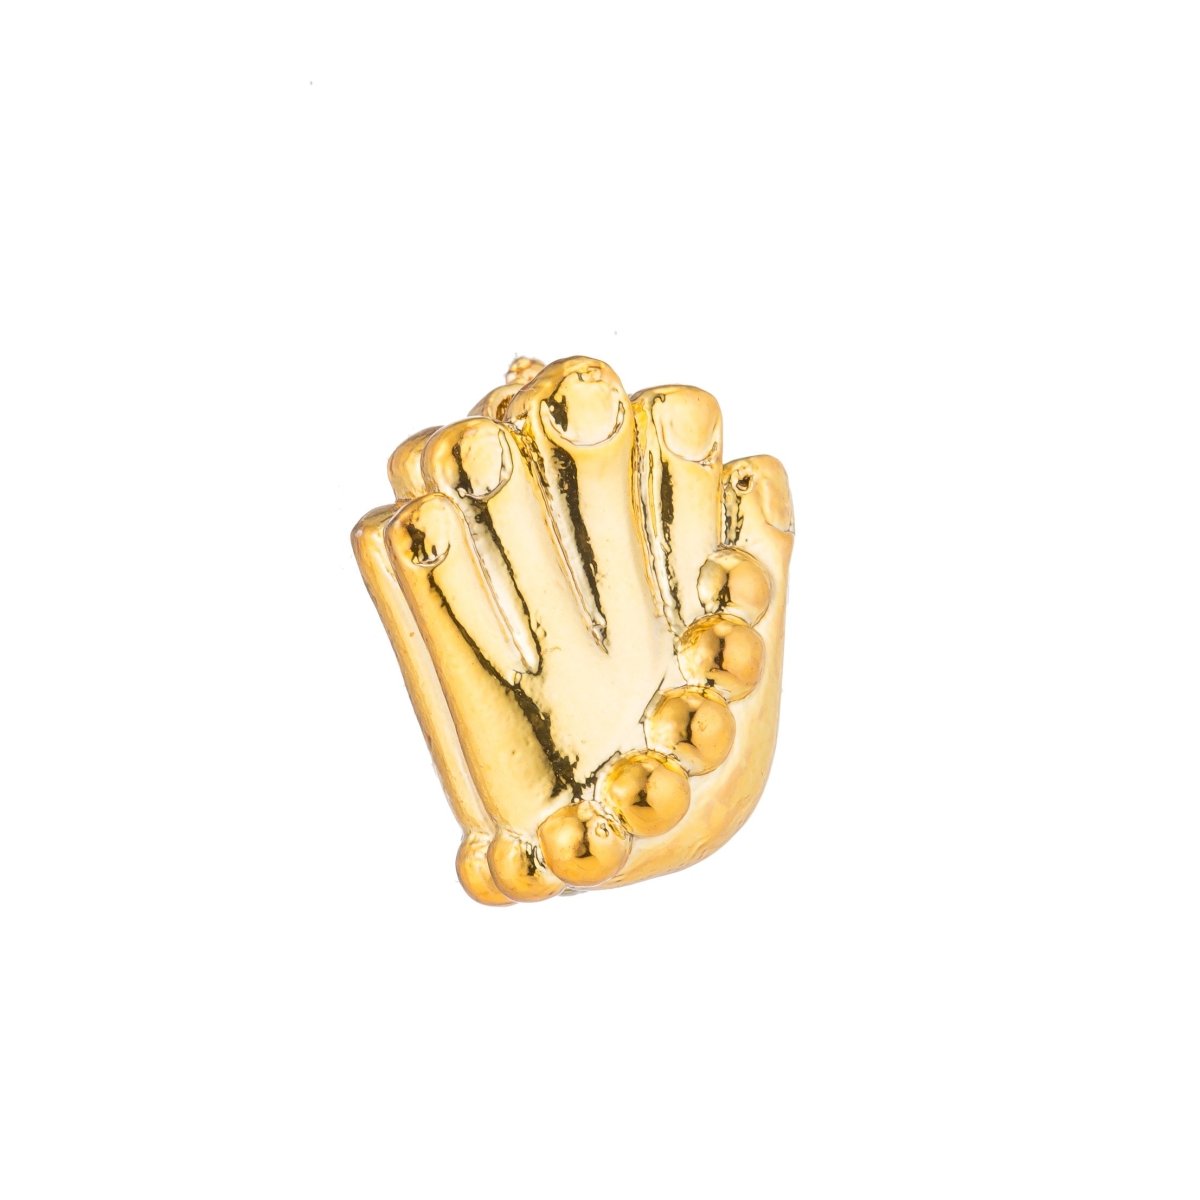 Gold Monk's Hand, Golden Hand, Prayer Bracelet, Buddhist, Buddhism, Religious, Bracelet Charm Bead Finding Connector for Jewelry Making, B-274 - DLUXCA